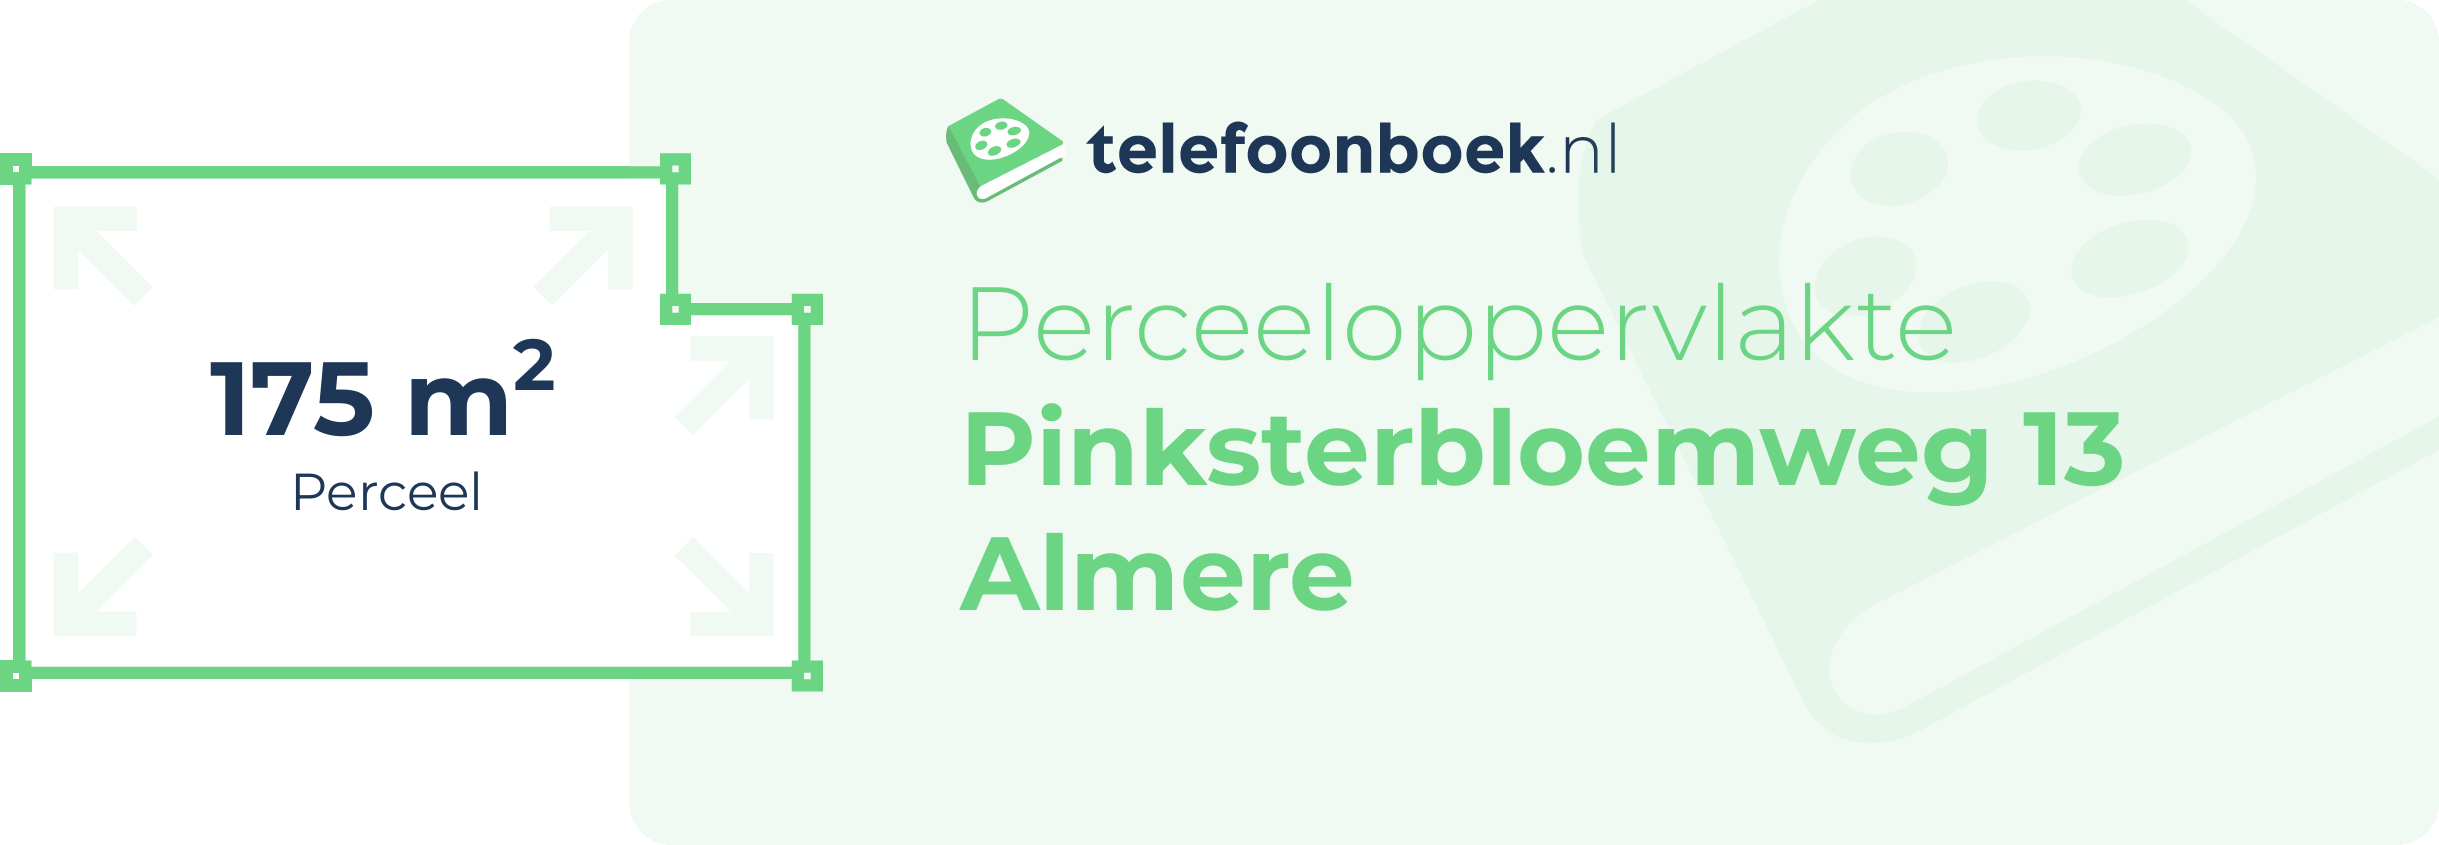 Perceeloppervlakte Pinksterbloemweg 13 Almere